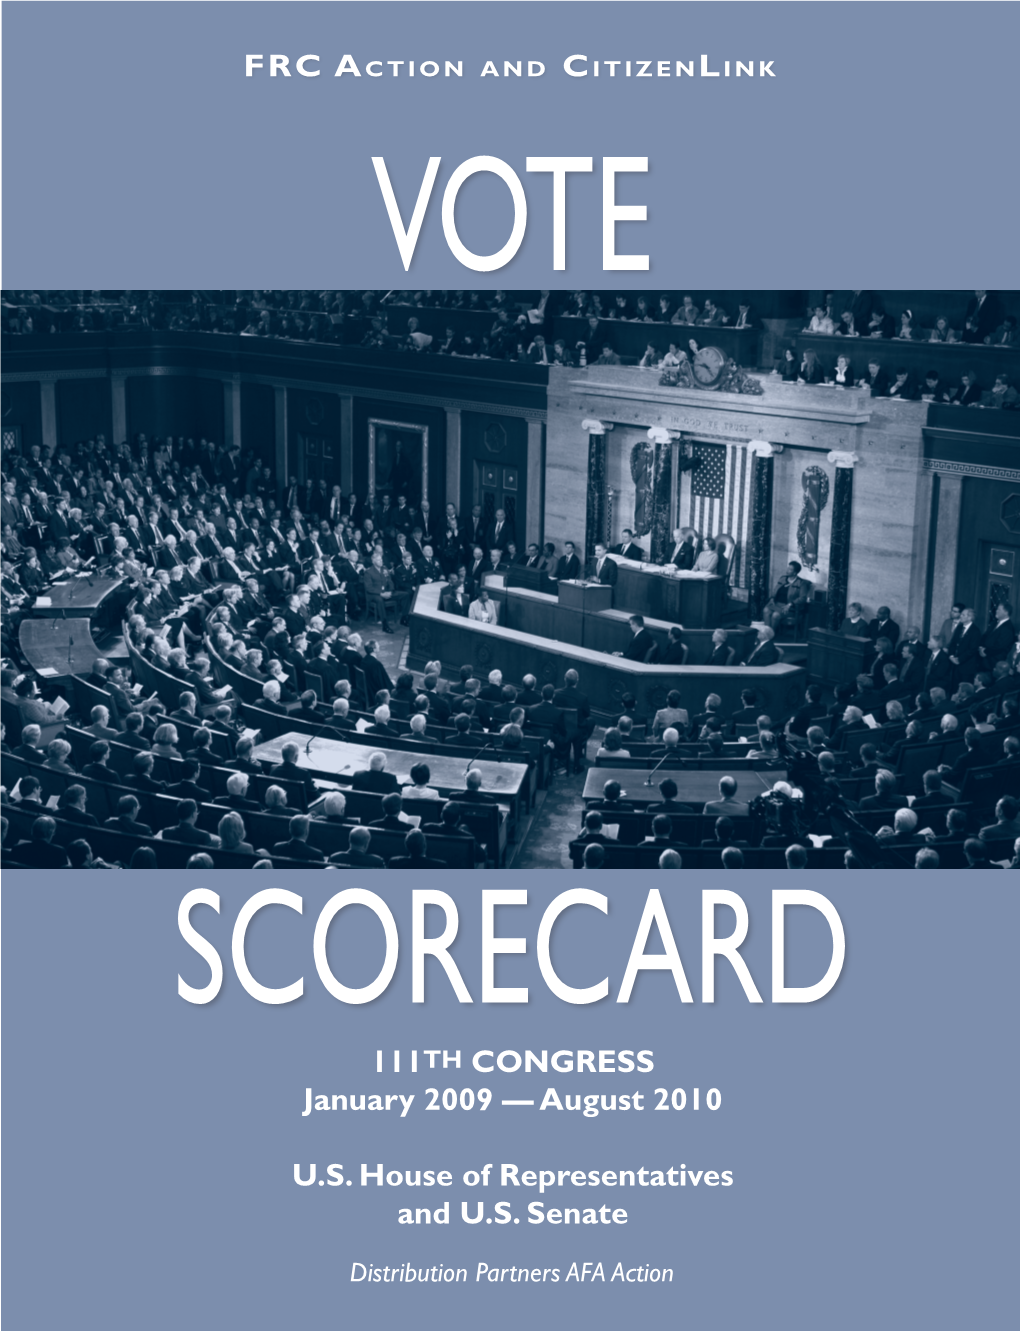 111TH CONGRESS January 2009 — August 2010 U.S. House of Representatives and U.S. Senate